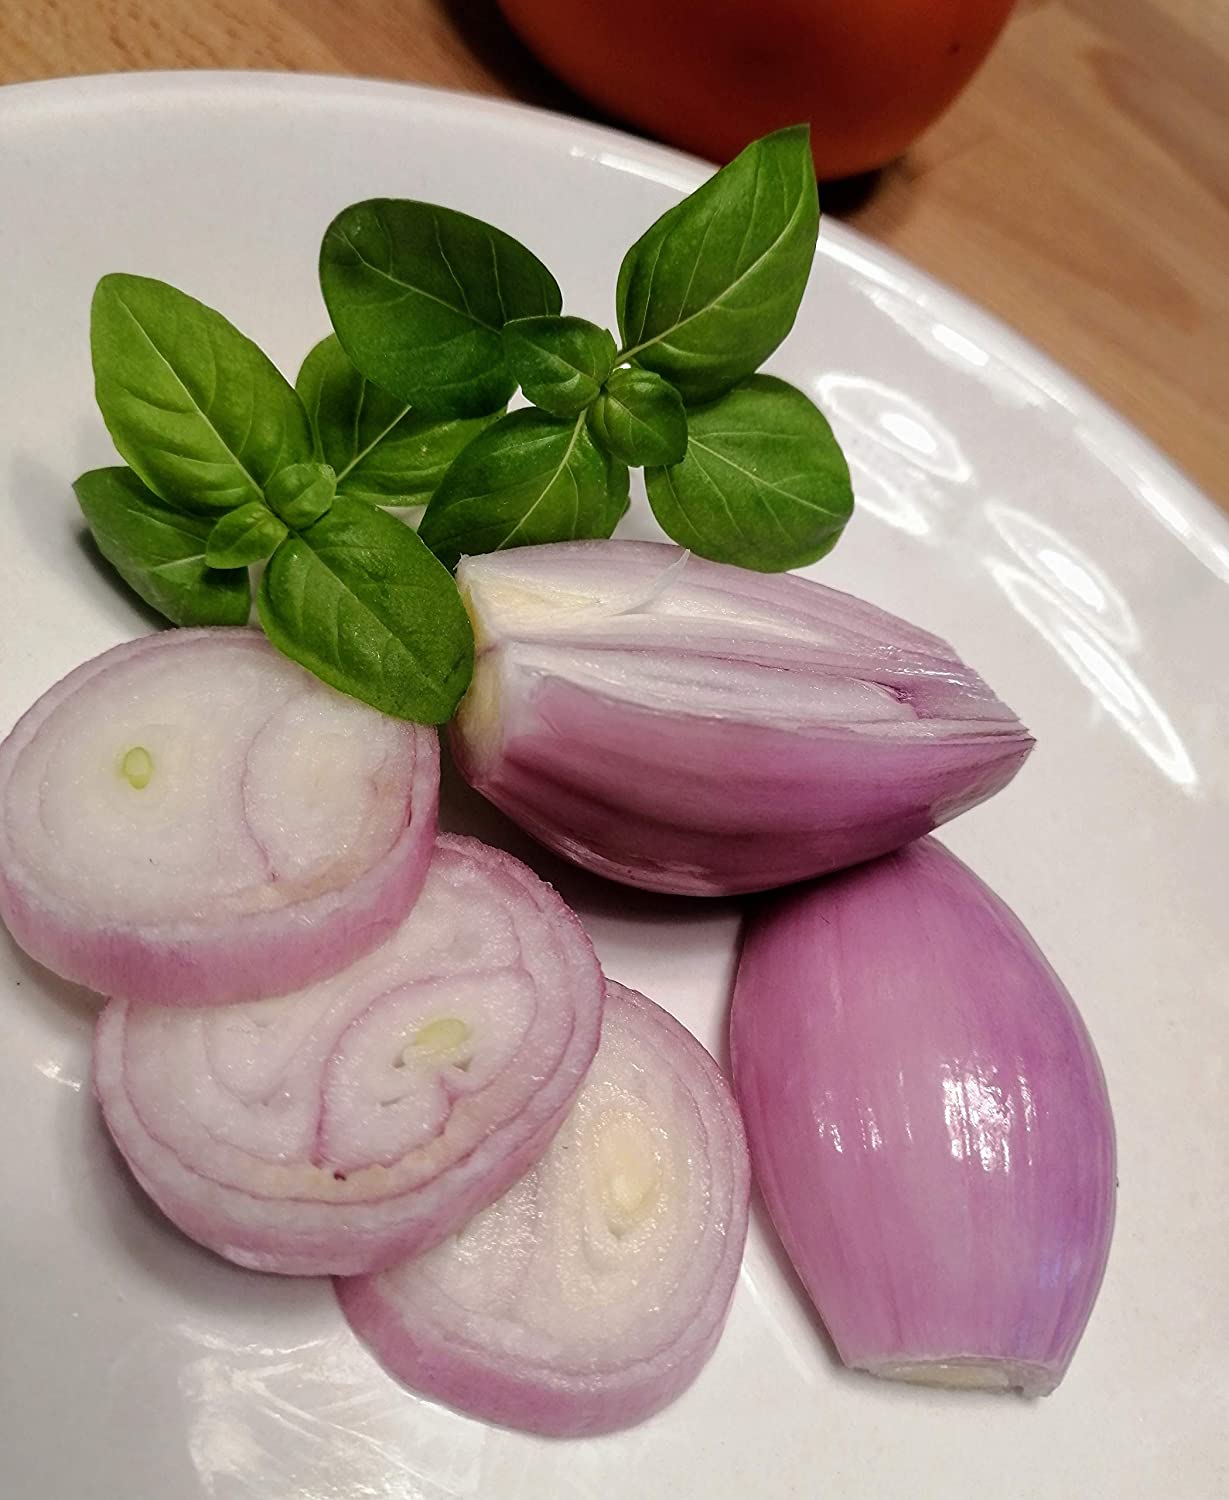 Hundredfold Italian Heirloom Torpedo Red Onion 100 Vegetable Seeds - Allium cepa, Non-GMO Rossa Lunga di Tropea, Sweet and Mild Taste